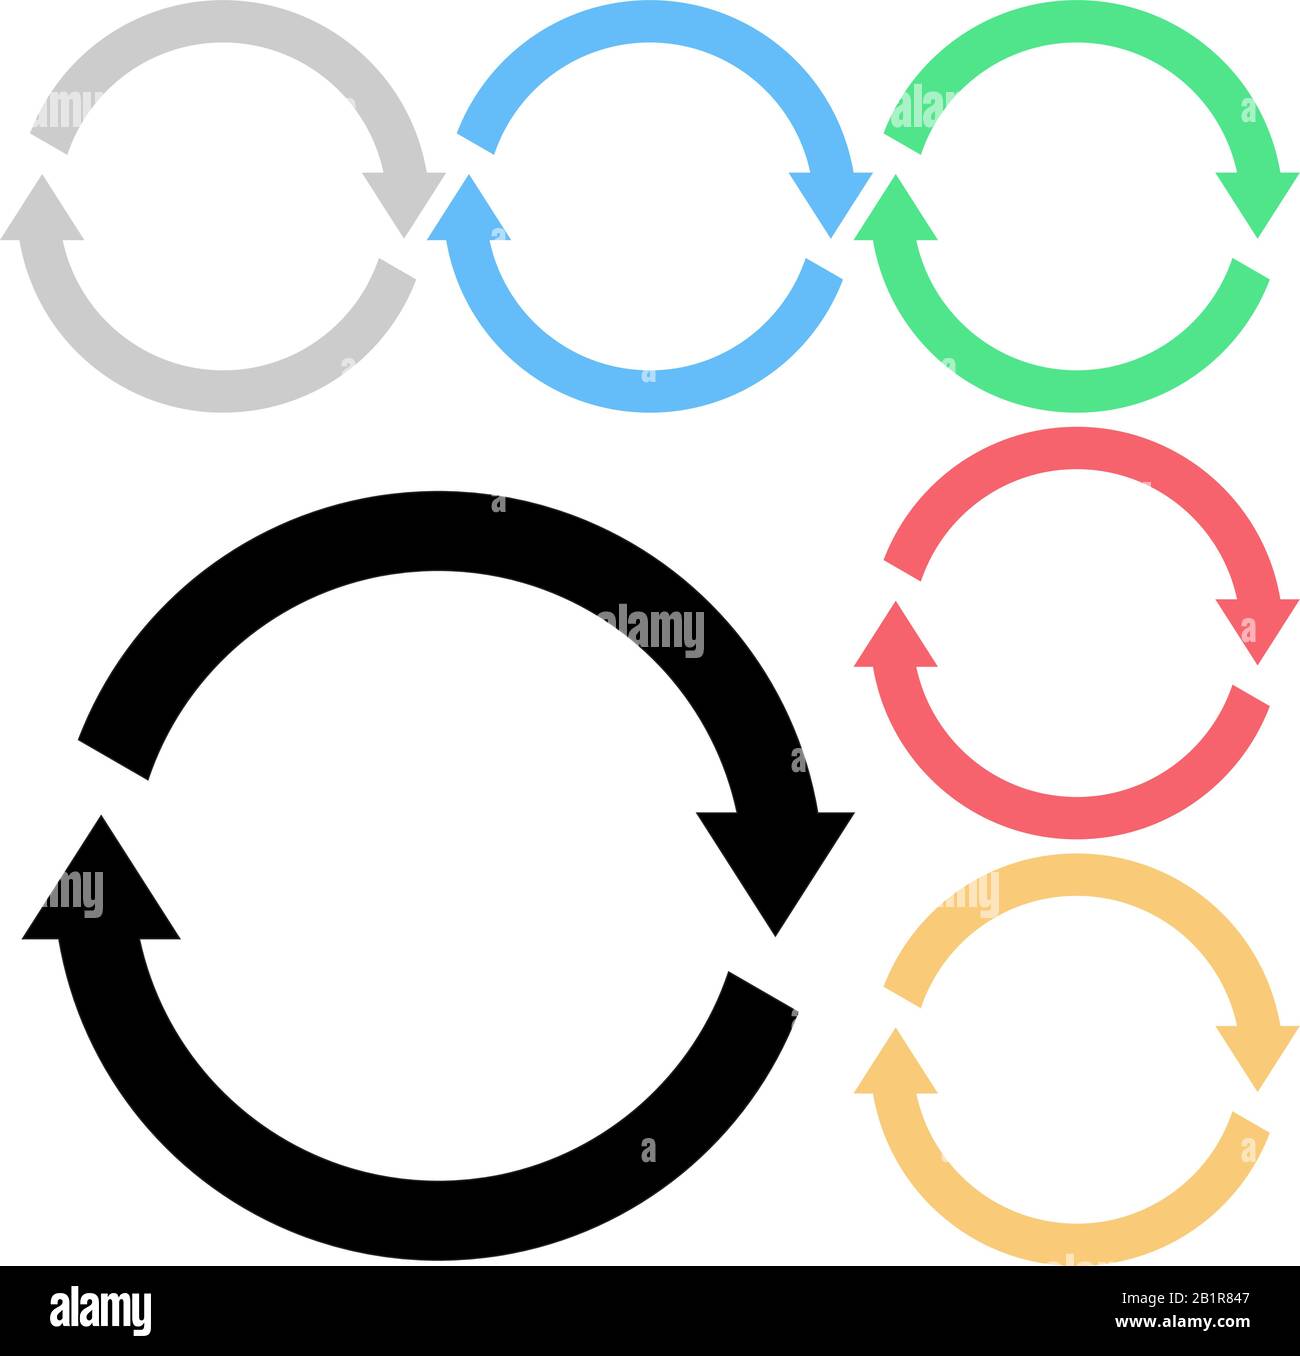 Refresh icon. Colored arrows in circular motion Stock Vector